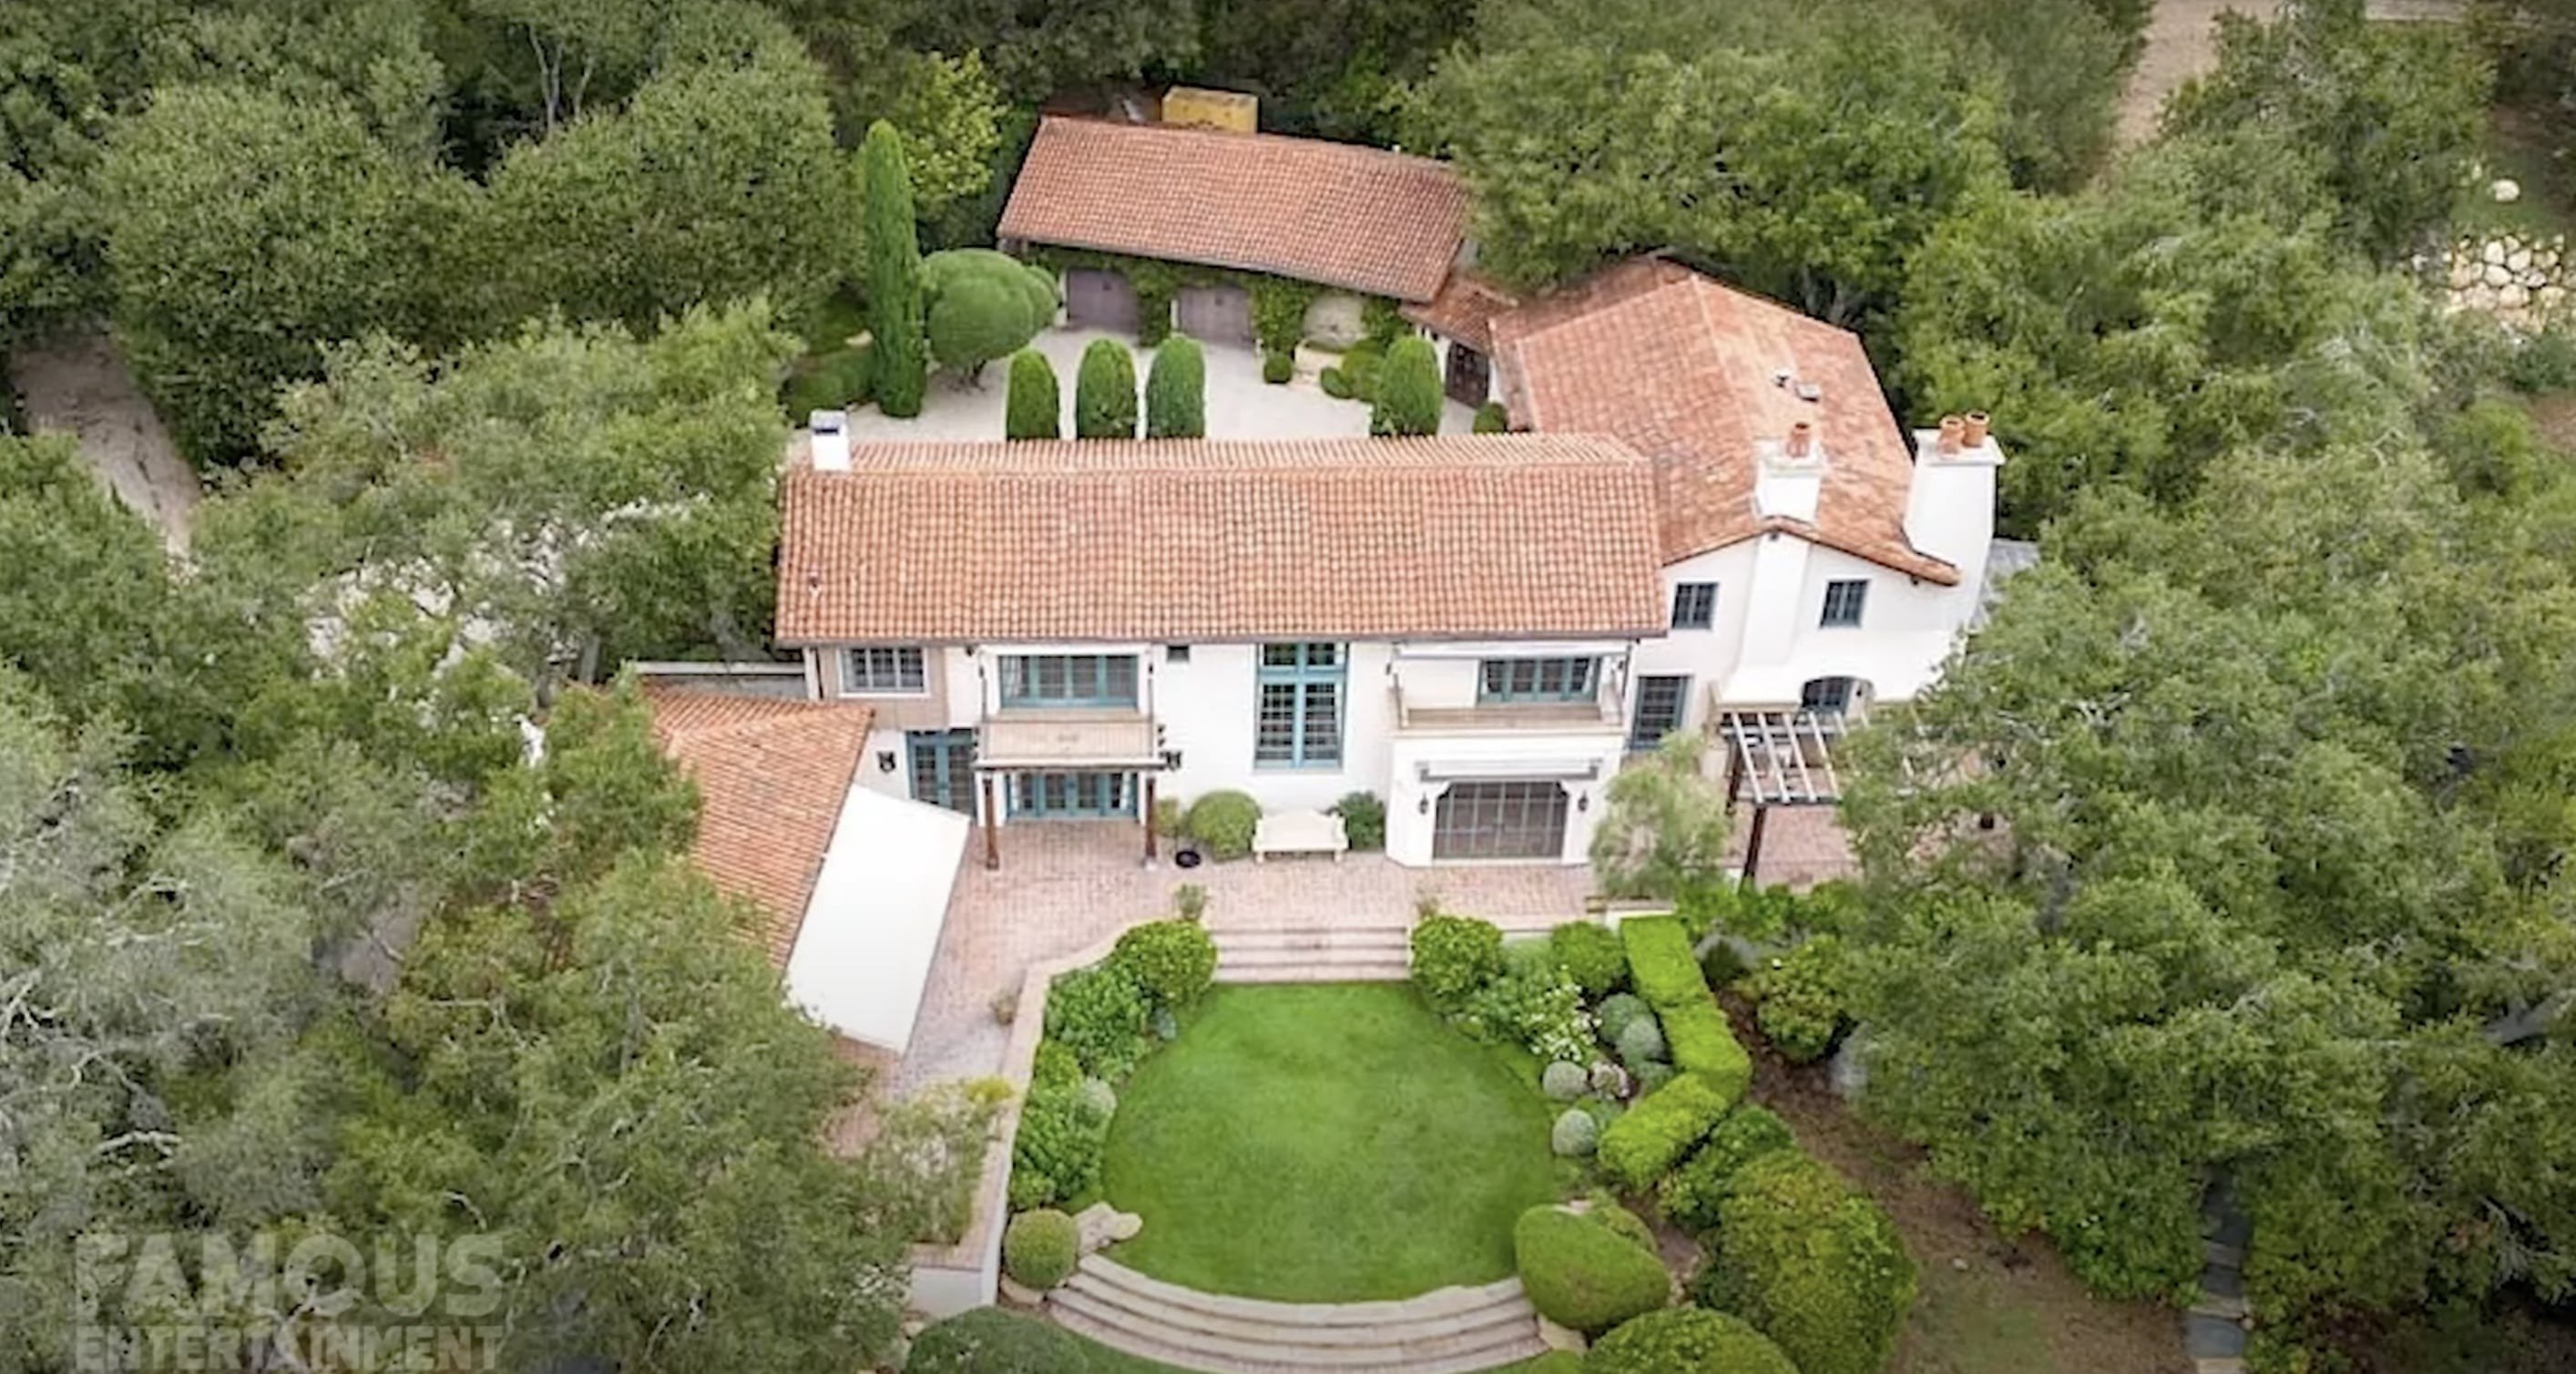 Jennifer Aniston's Montecito home | Source: Youtube.com/Famous Entertainment